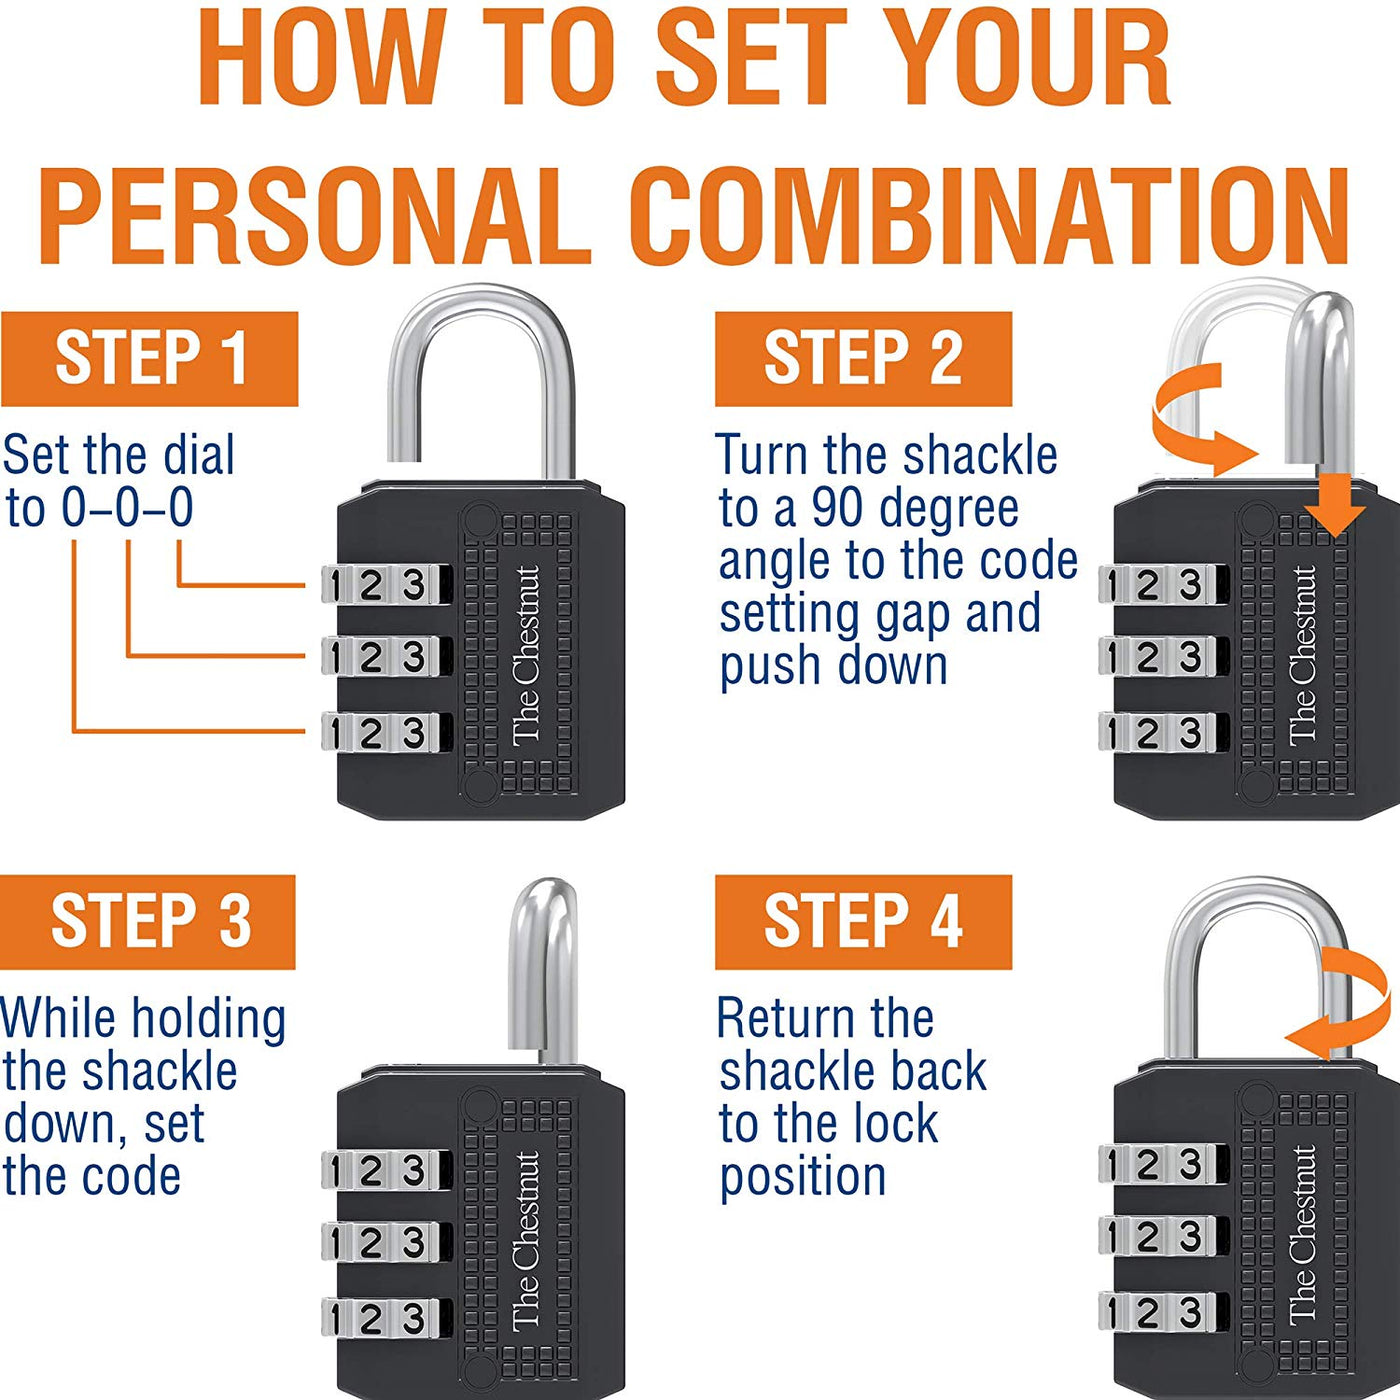 3 Digit Combination Lock